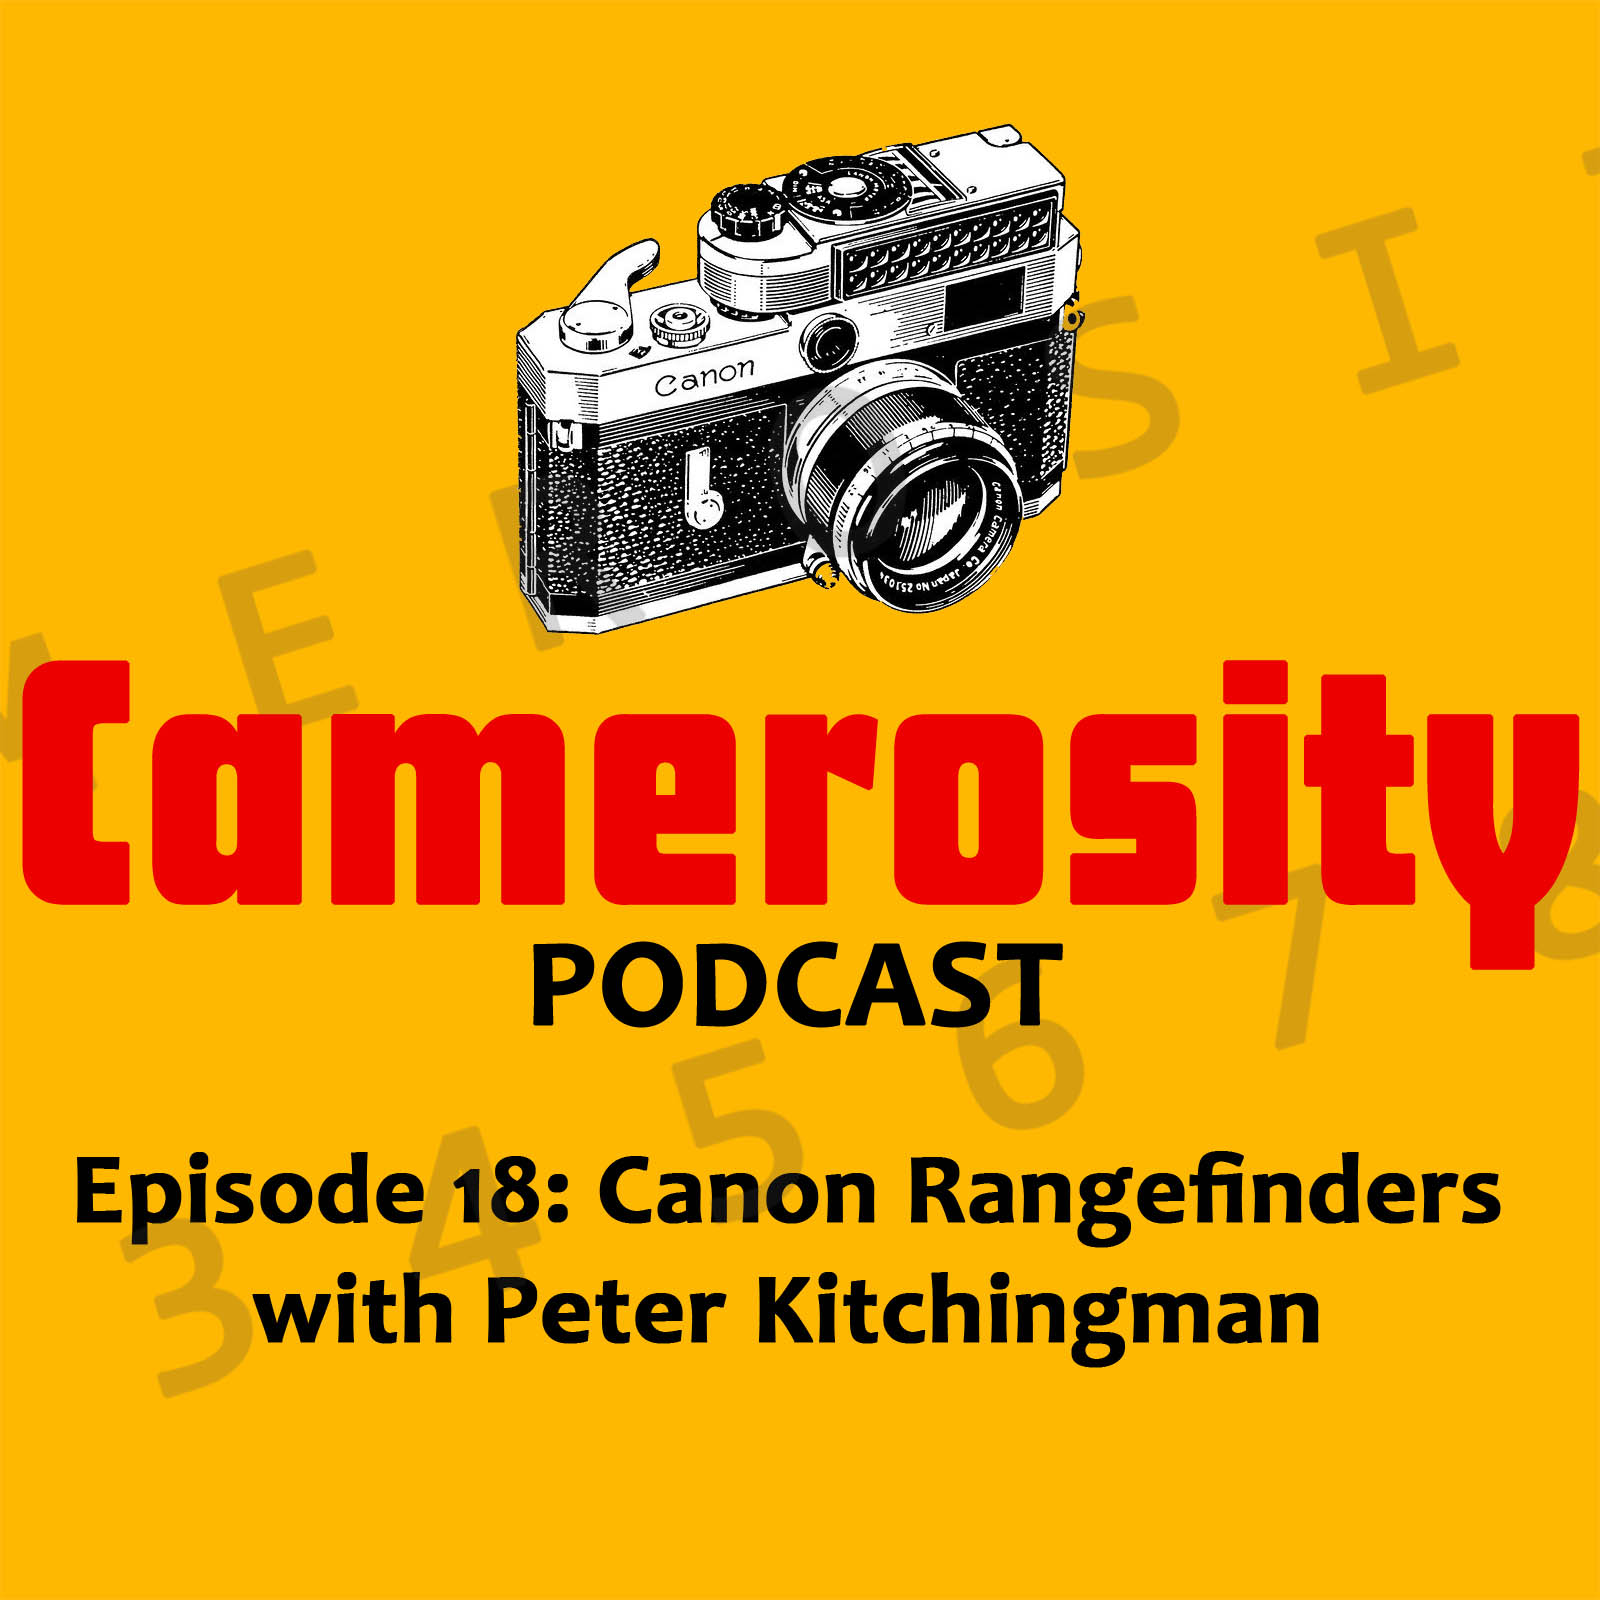 Episode 18: Canon Rangefinders with Peter Kitchingman